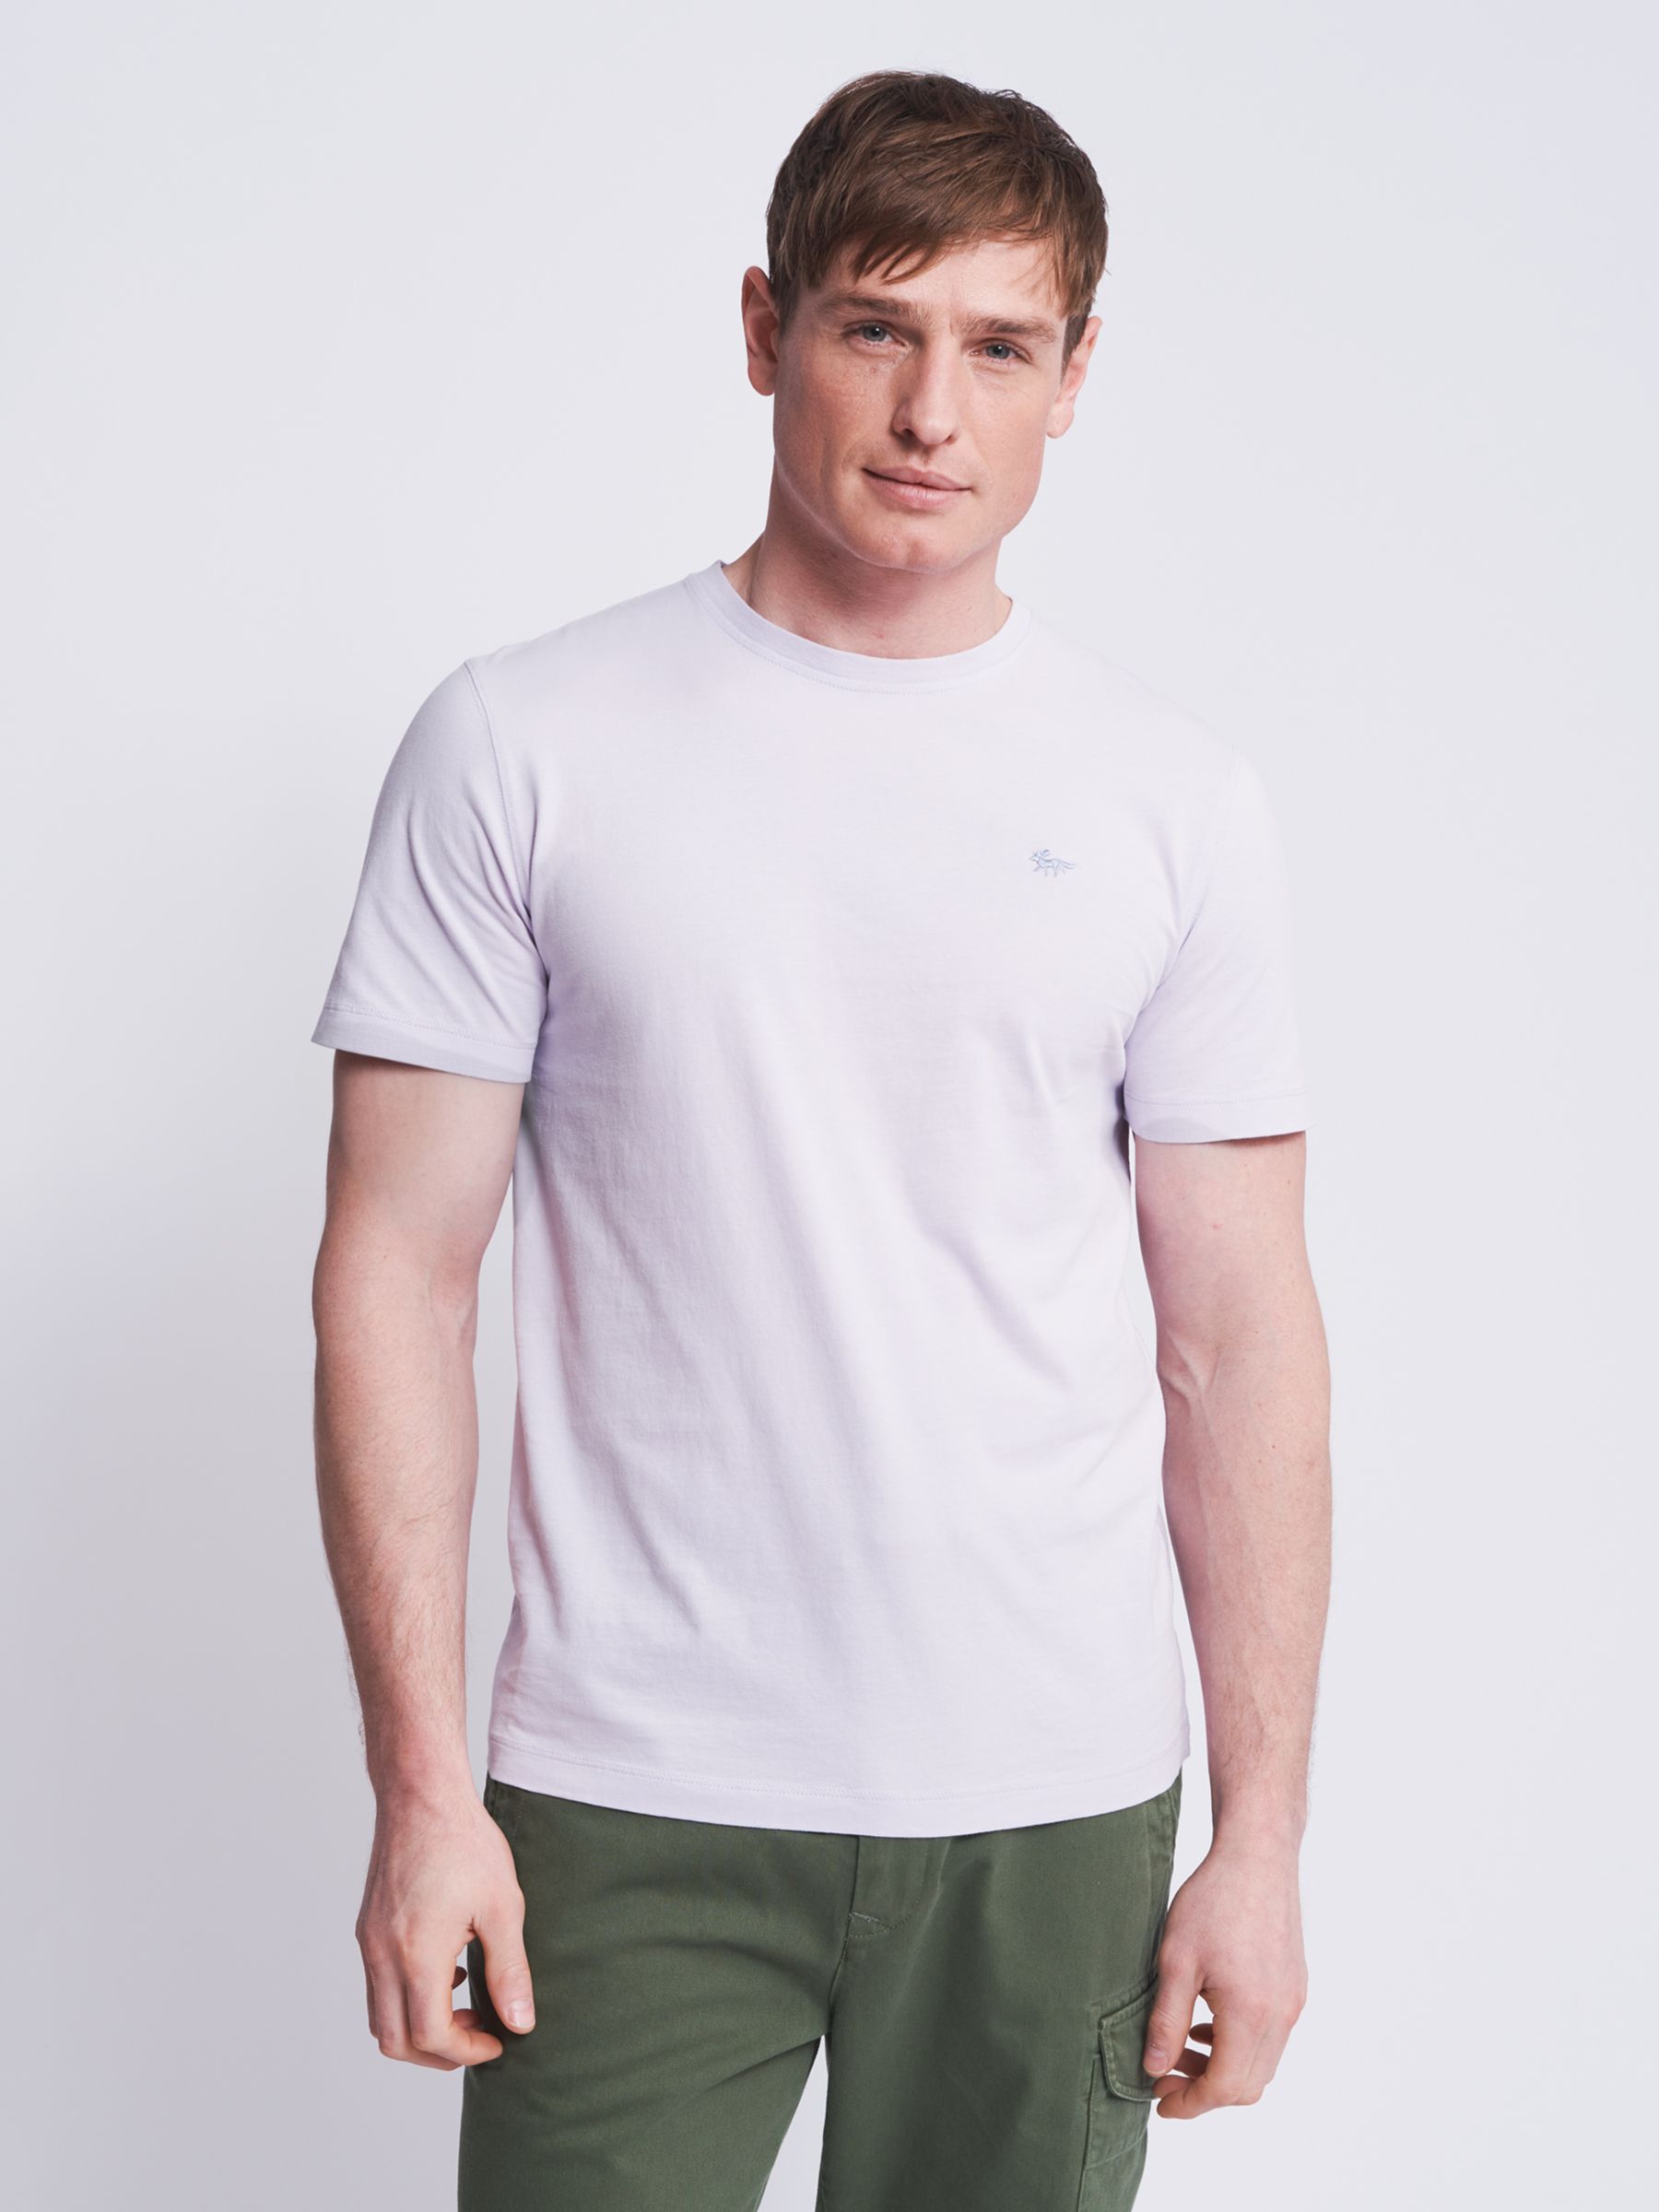 Men's T-Shirts  John Lewis & Partners